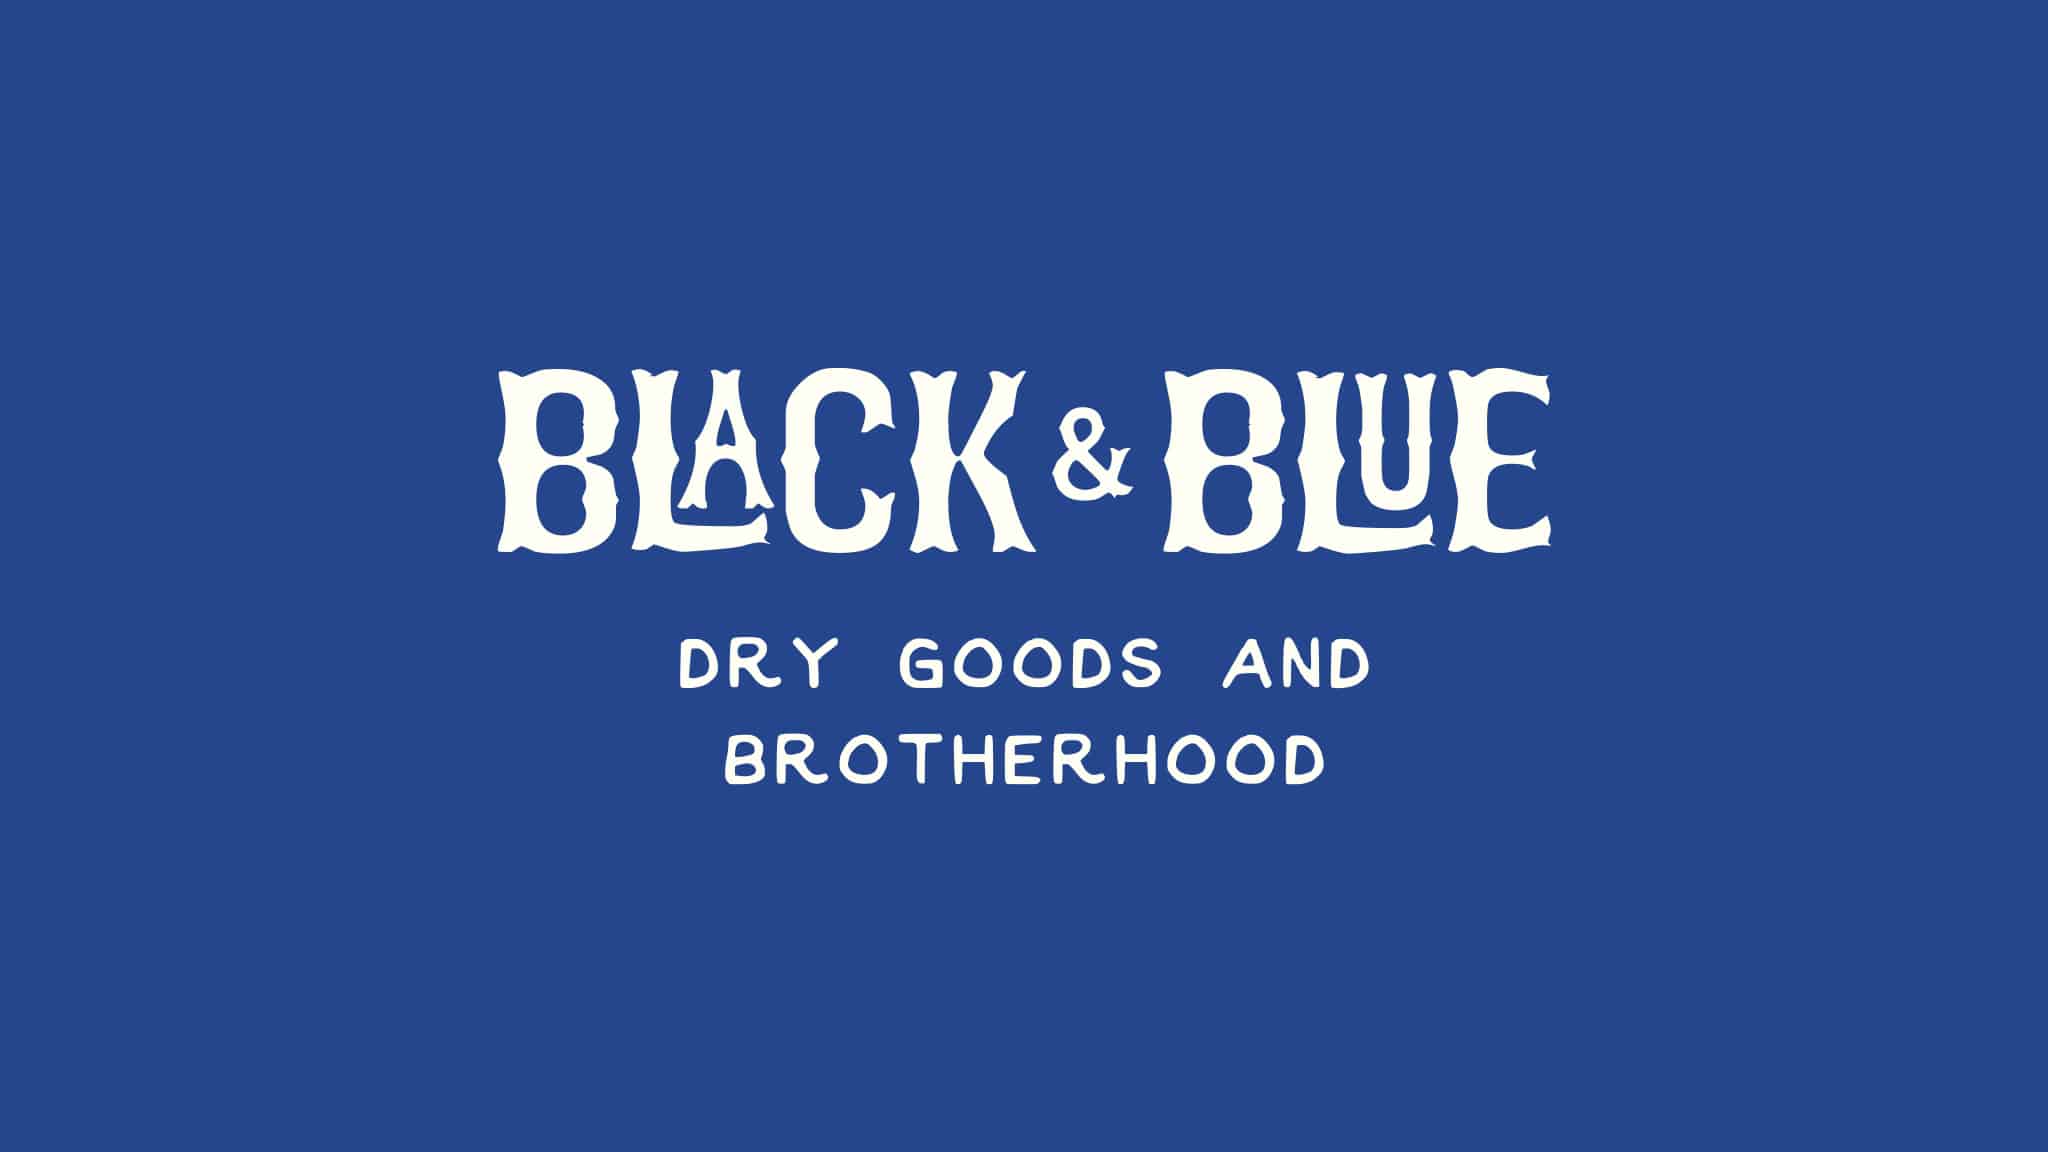 Black & Blue Shop - Typografie